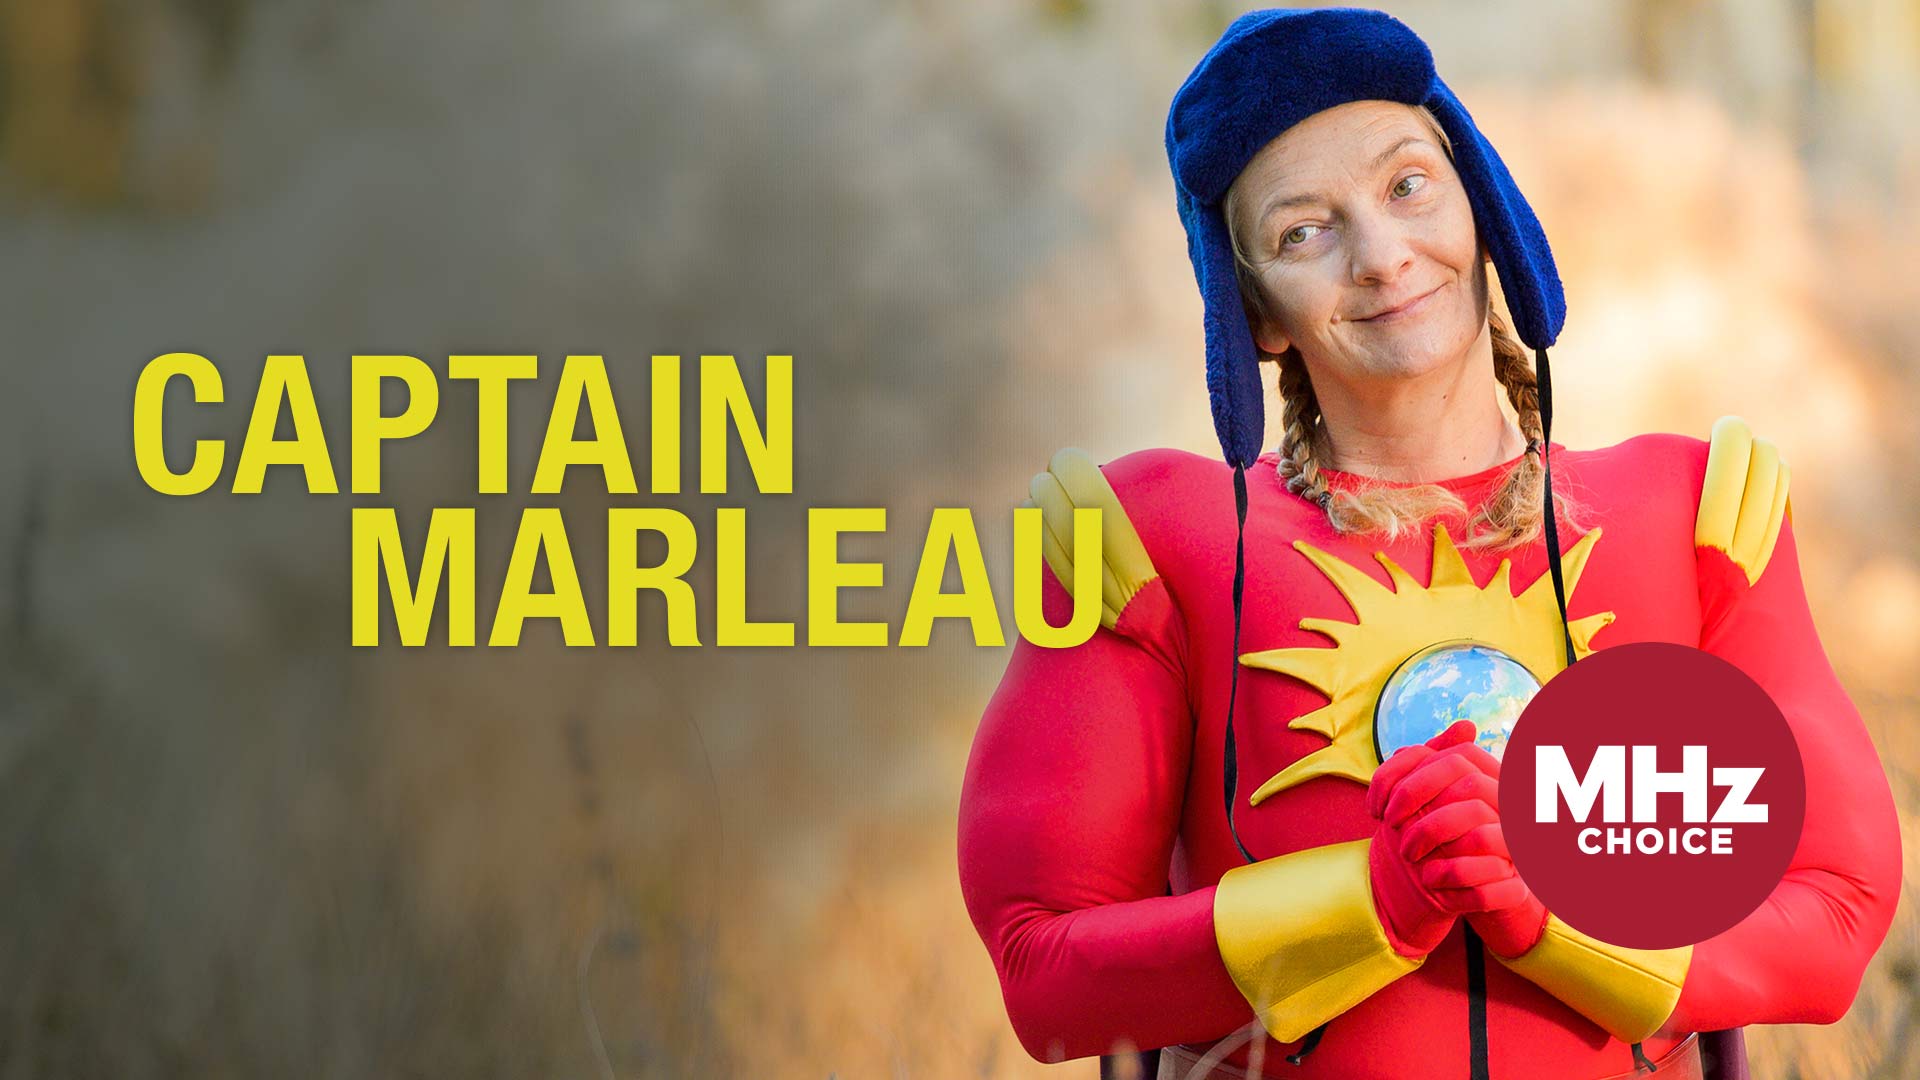 captain marleau s2 logo vimeo ott series banner 1920x1080 1